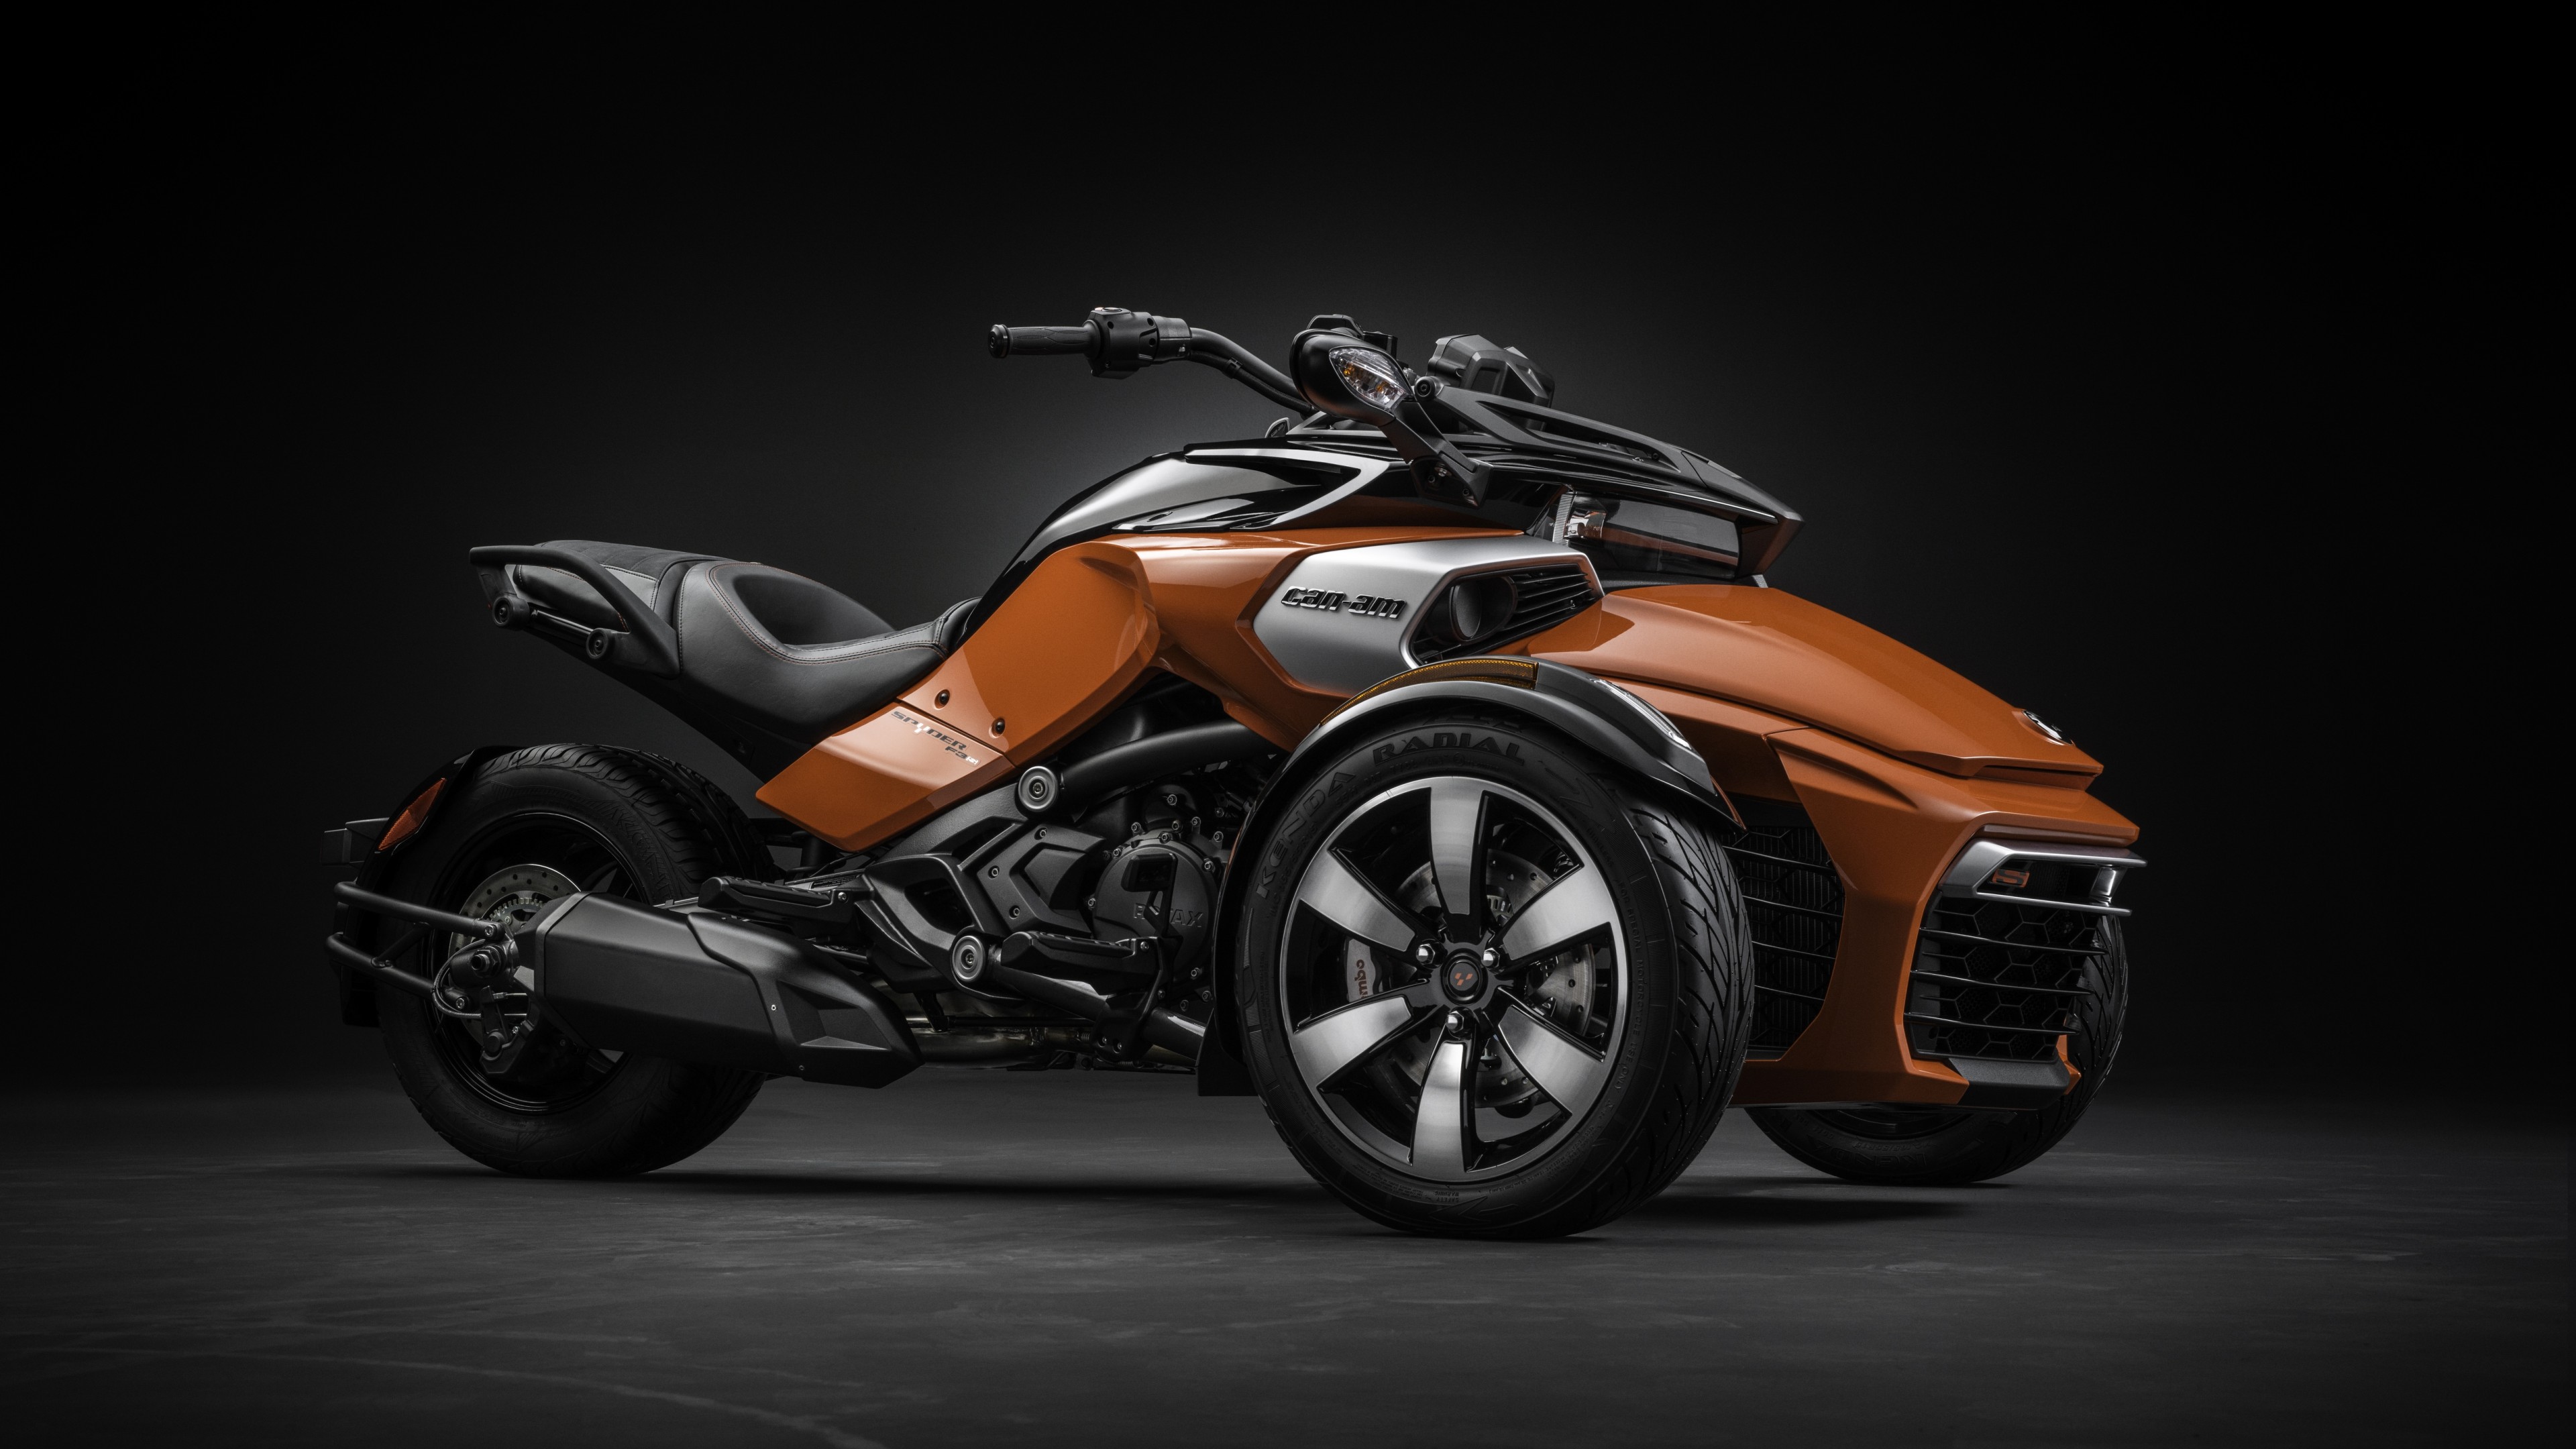 Wallpaper Brp Can Am Spyder F3 S Roadster Motorcycle Cruiser